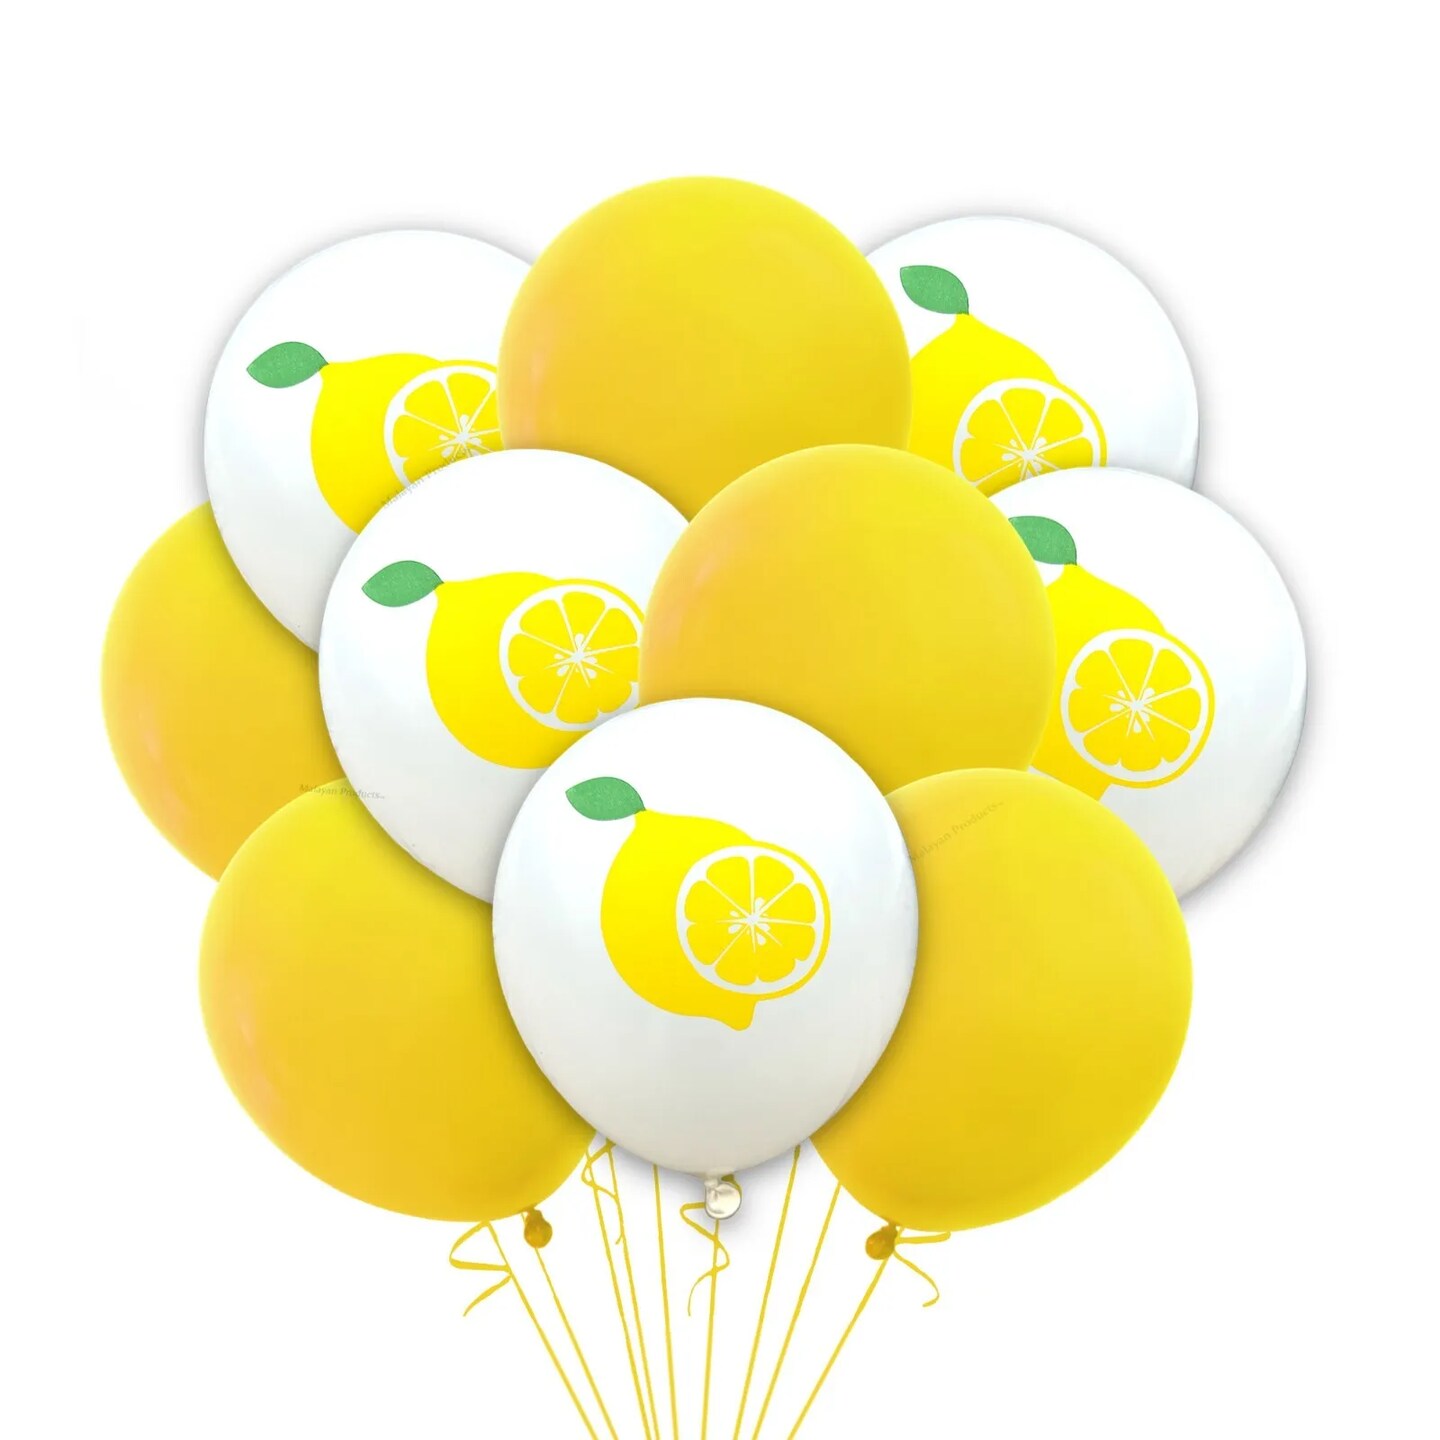 Kitcheniva Lemon Themed Party Balloons 12 Pcs